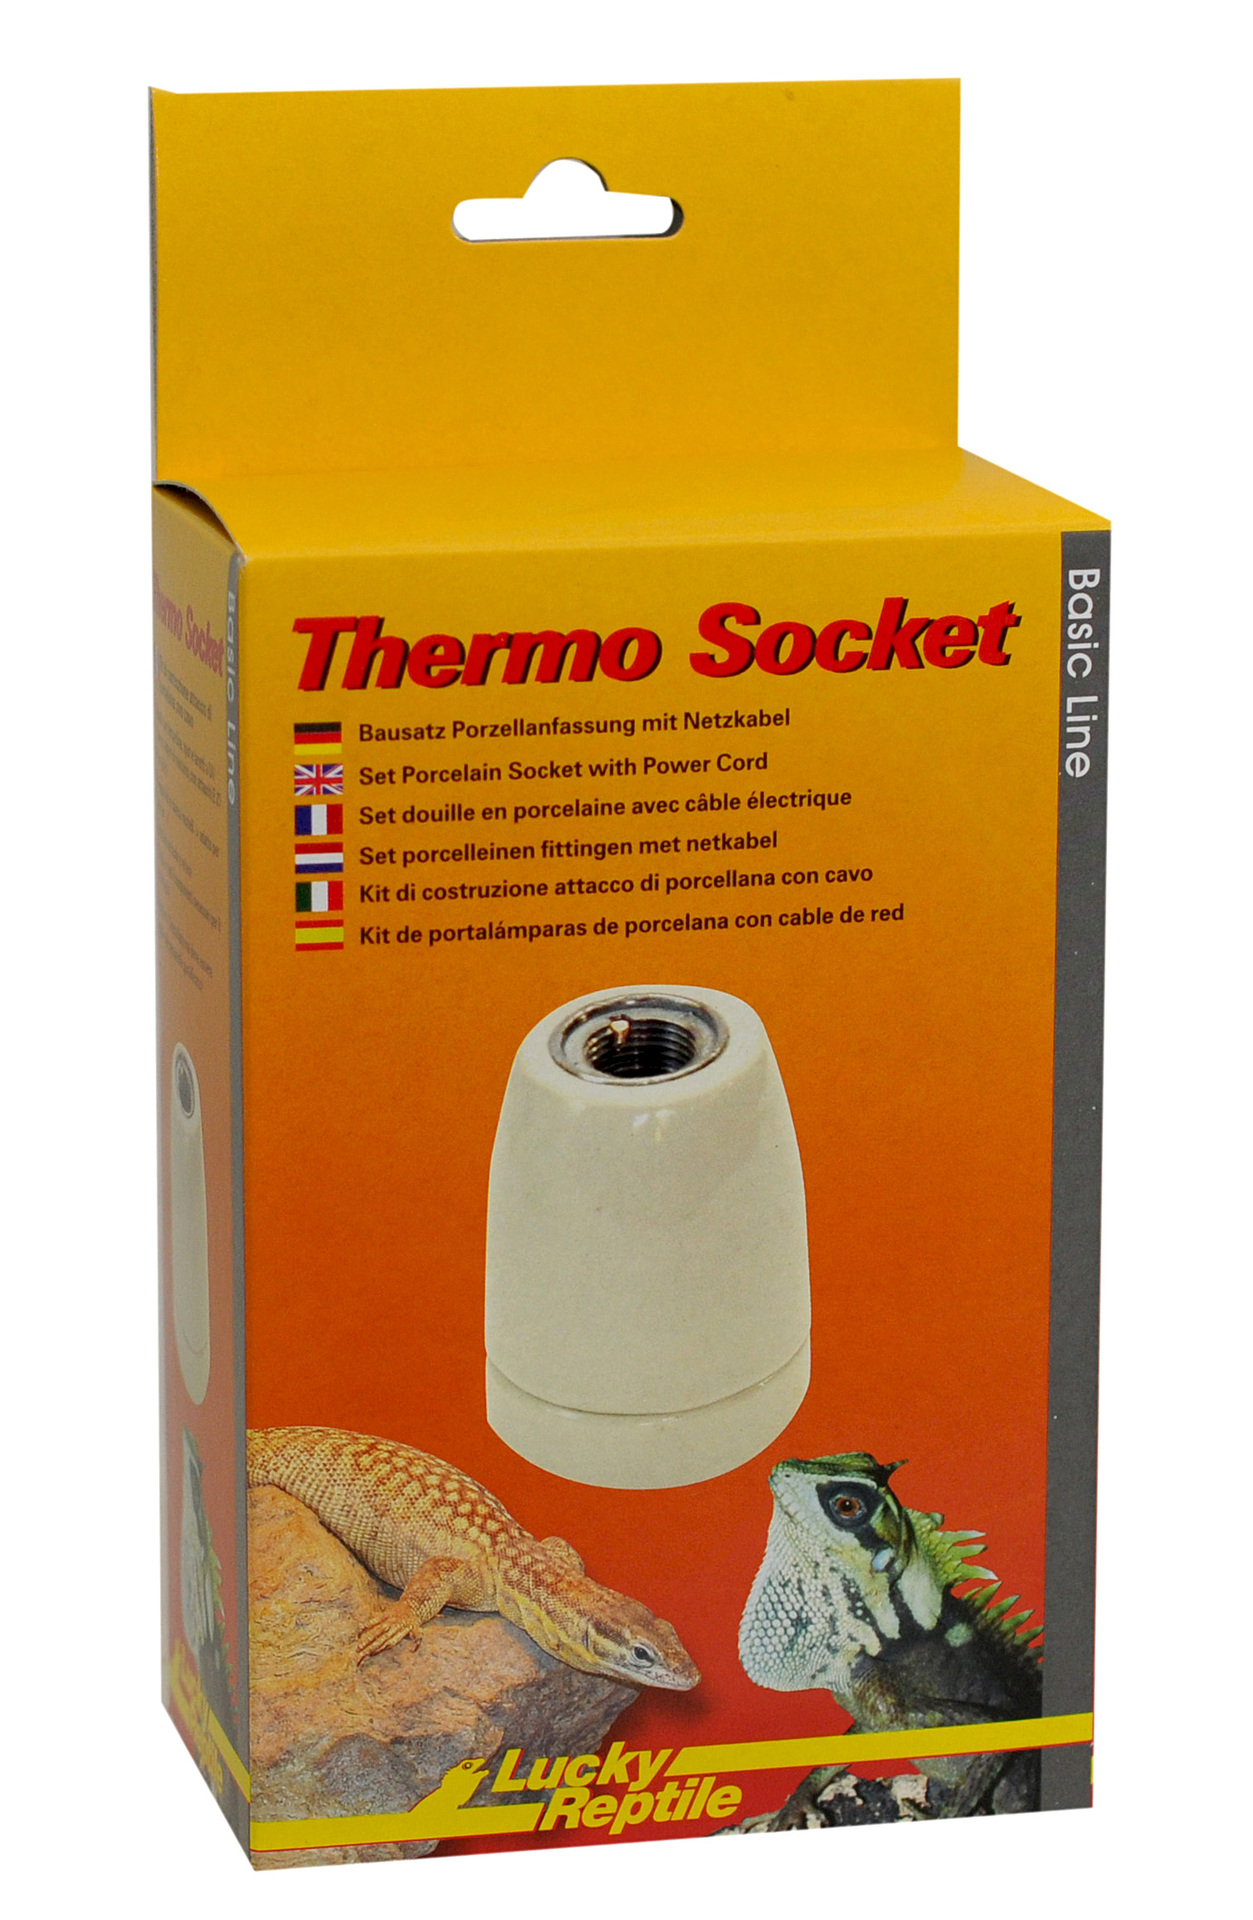 Thermo Socket – Porzellanfassung